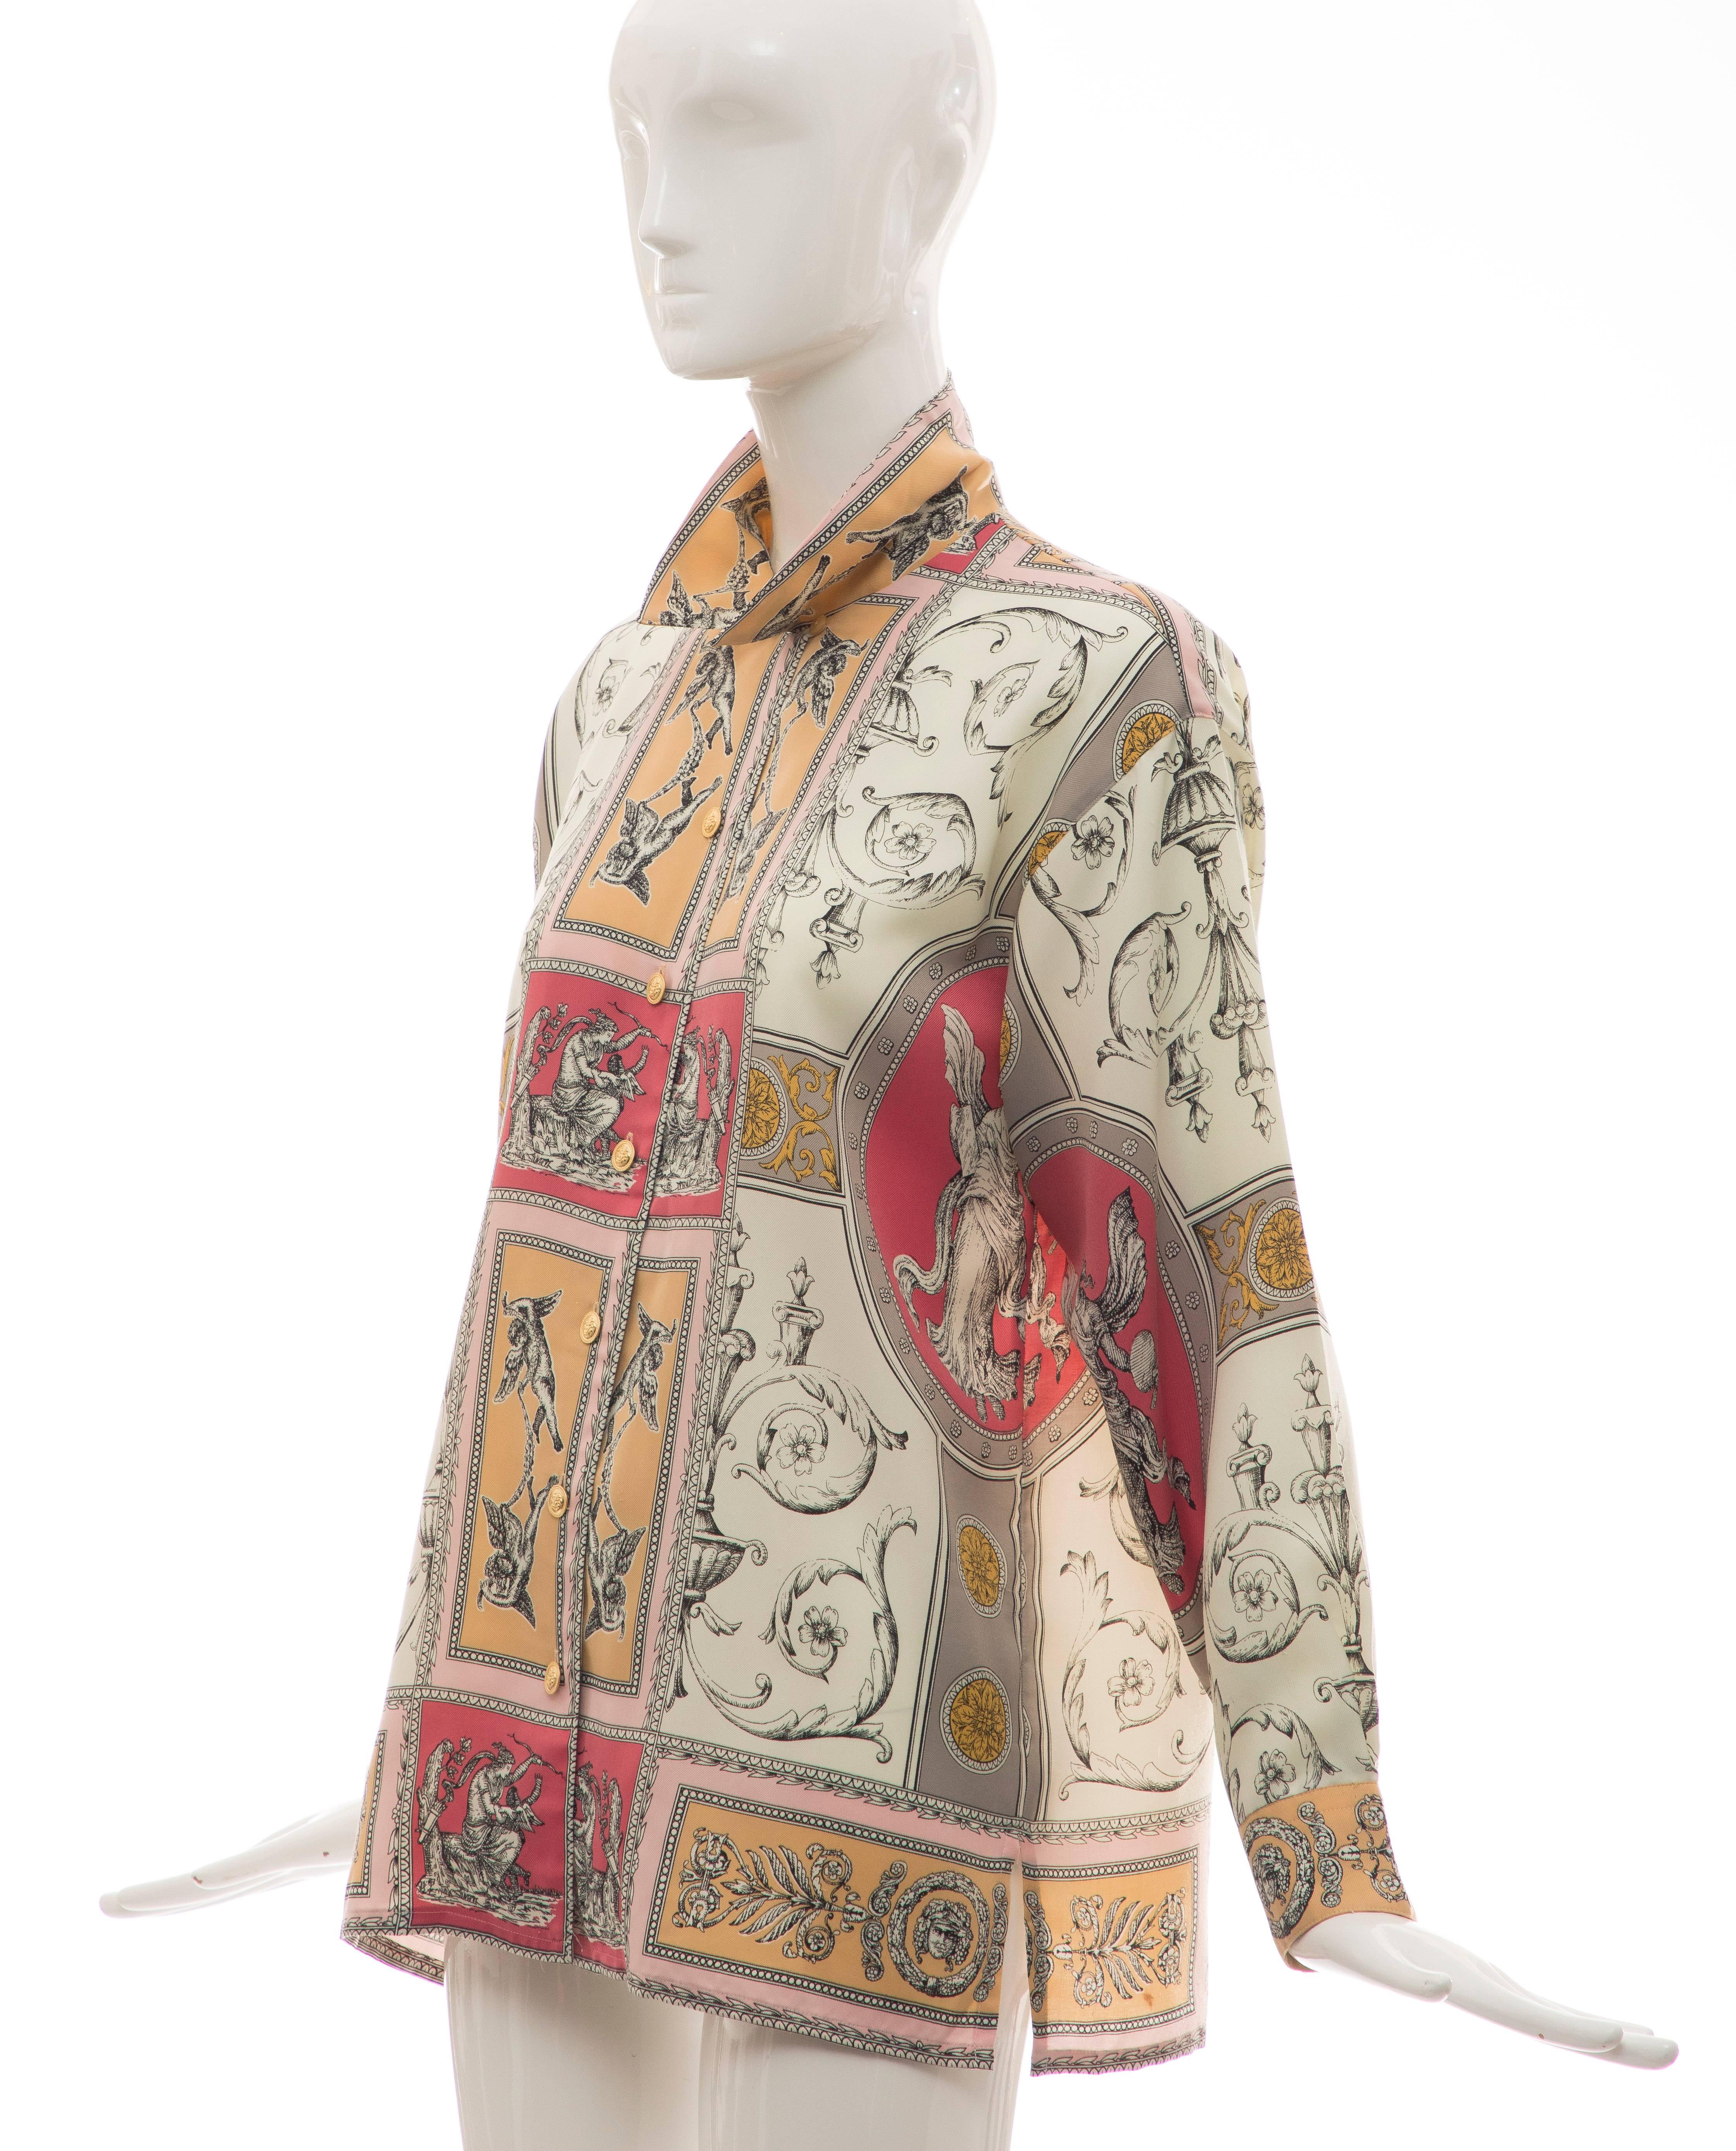 Gianni Versace Cherub Print Silk Blouse, Circa 1990's For Sale 2